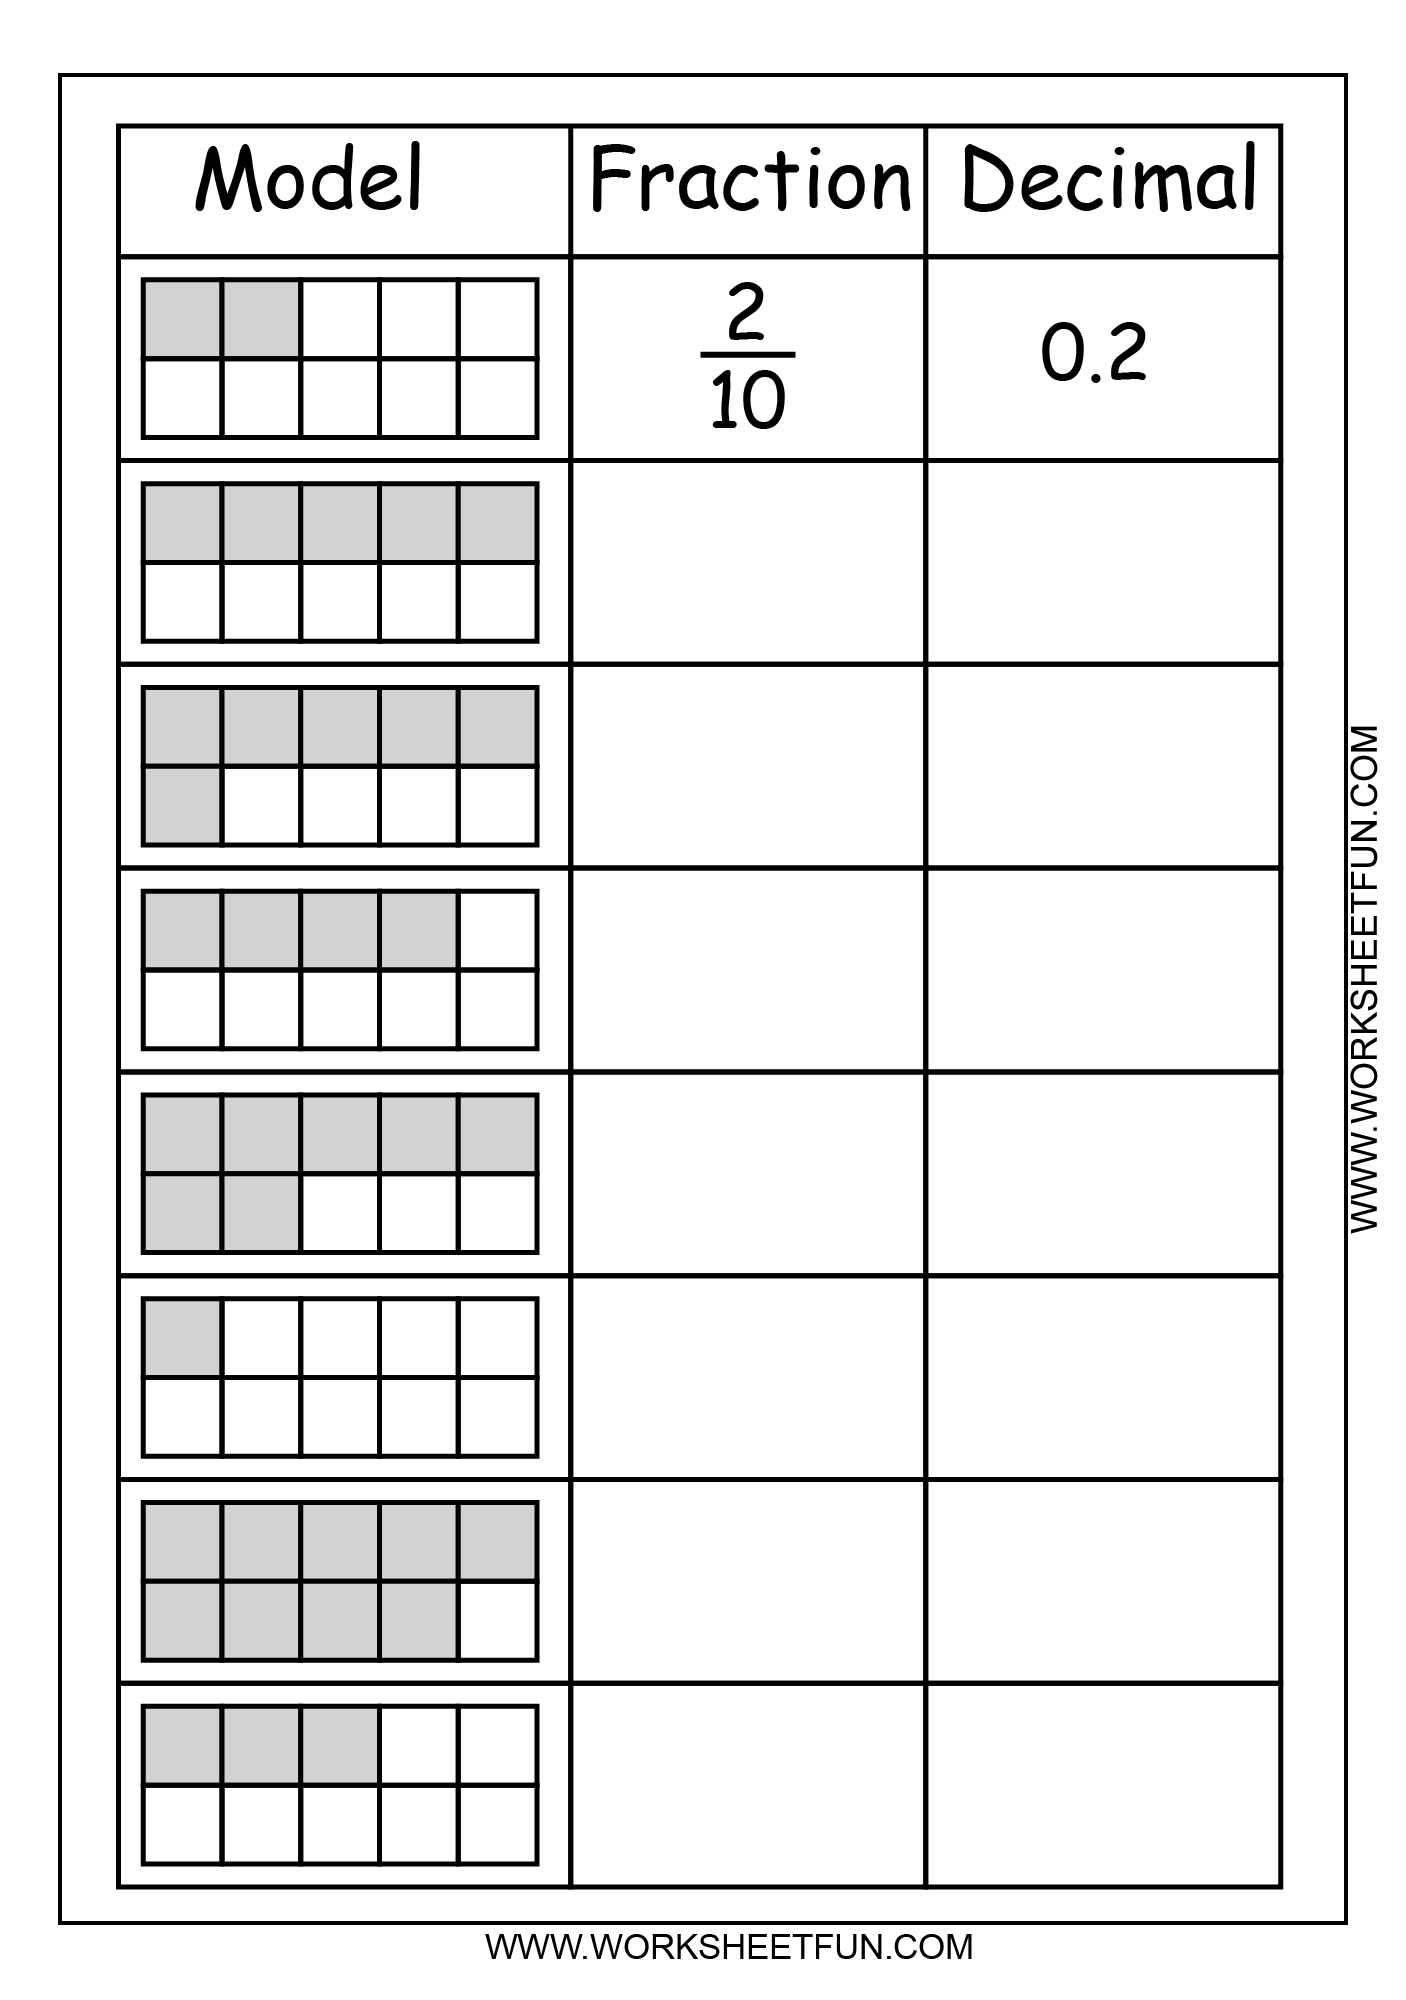 writing-fractions-as-decimals-worksheet-writing-worksheets